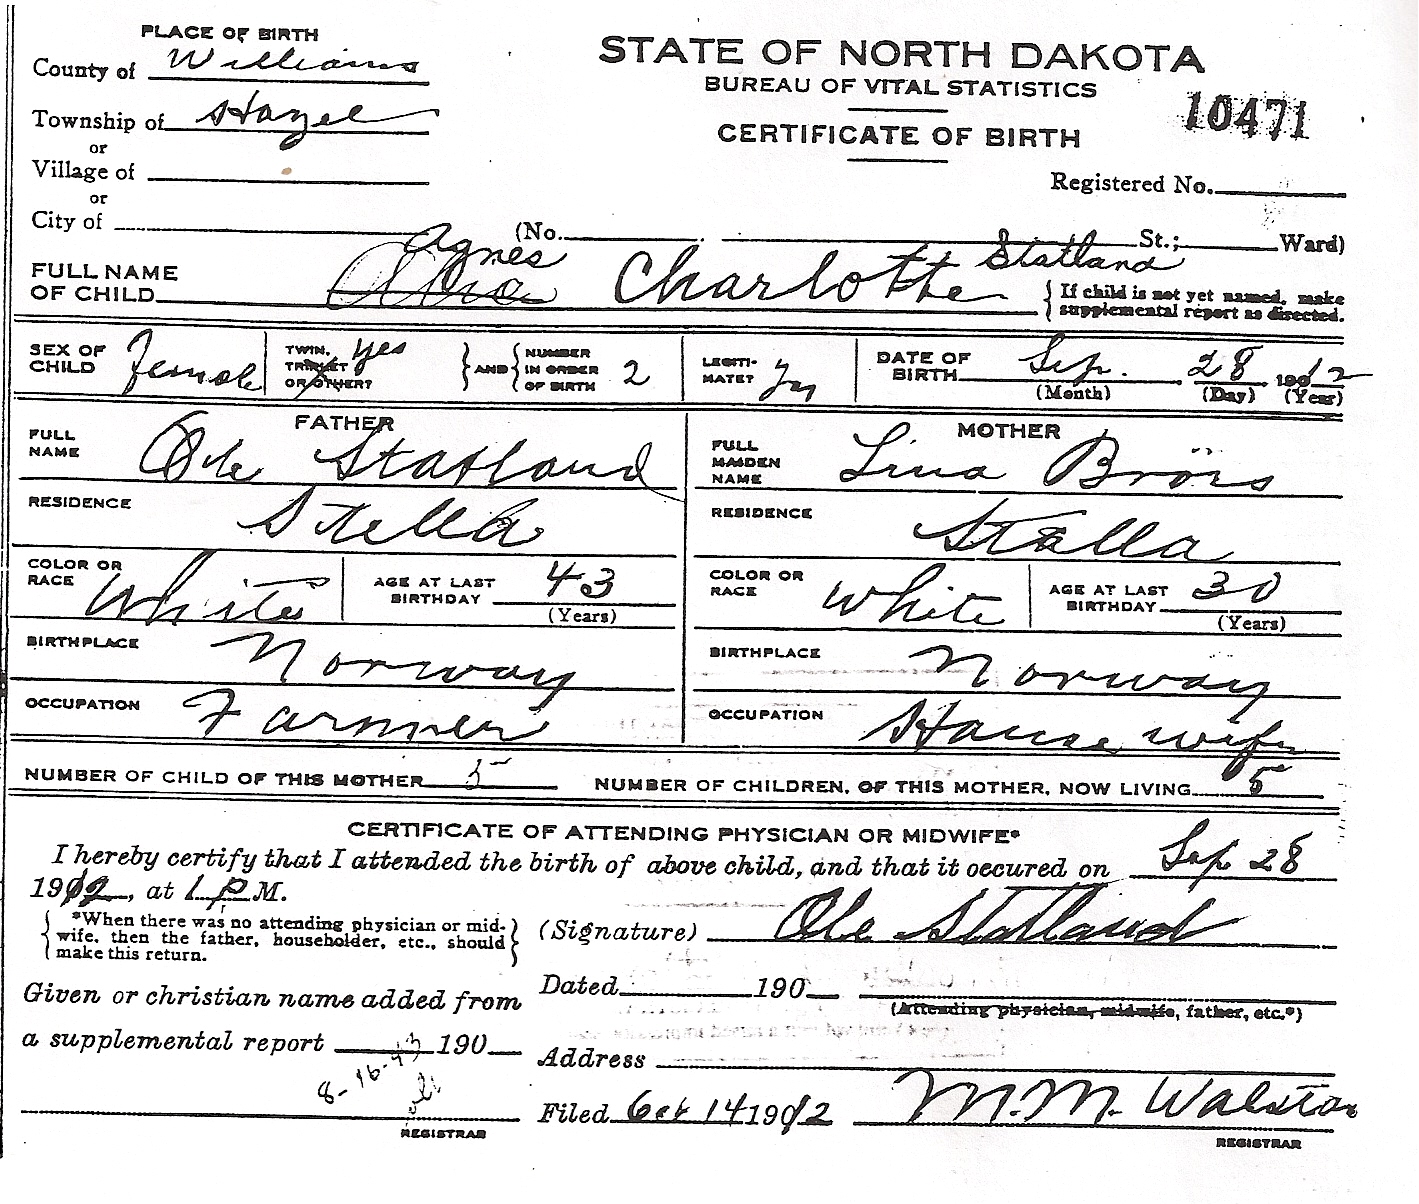 Agnes Statlands birth certificate